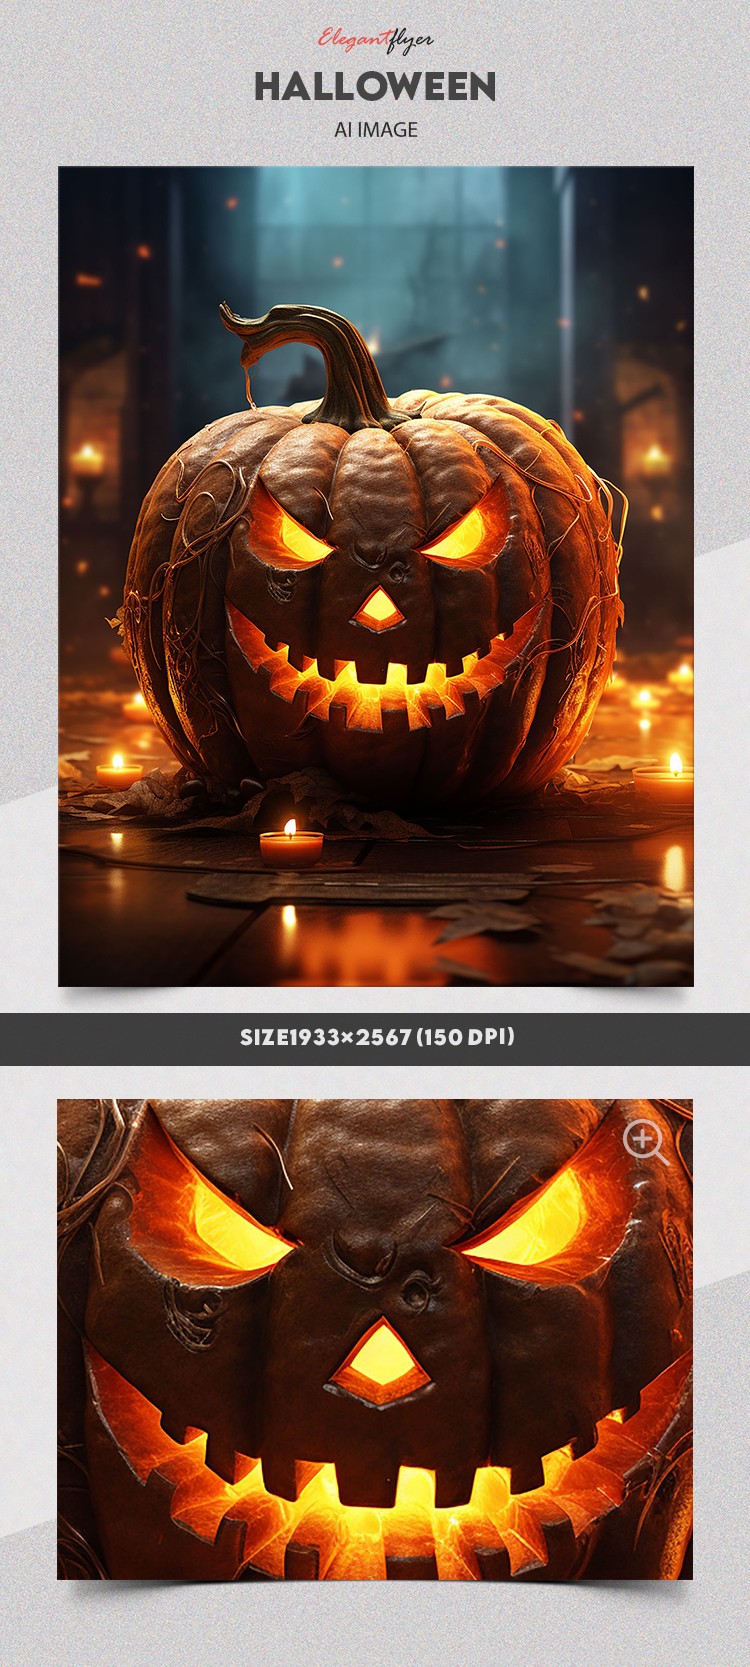 Evil Halloween Pumpkin with Glowing Eyes by ElegantFlyer